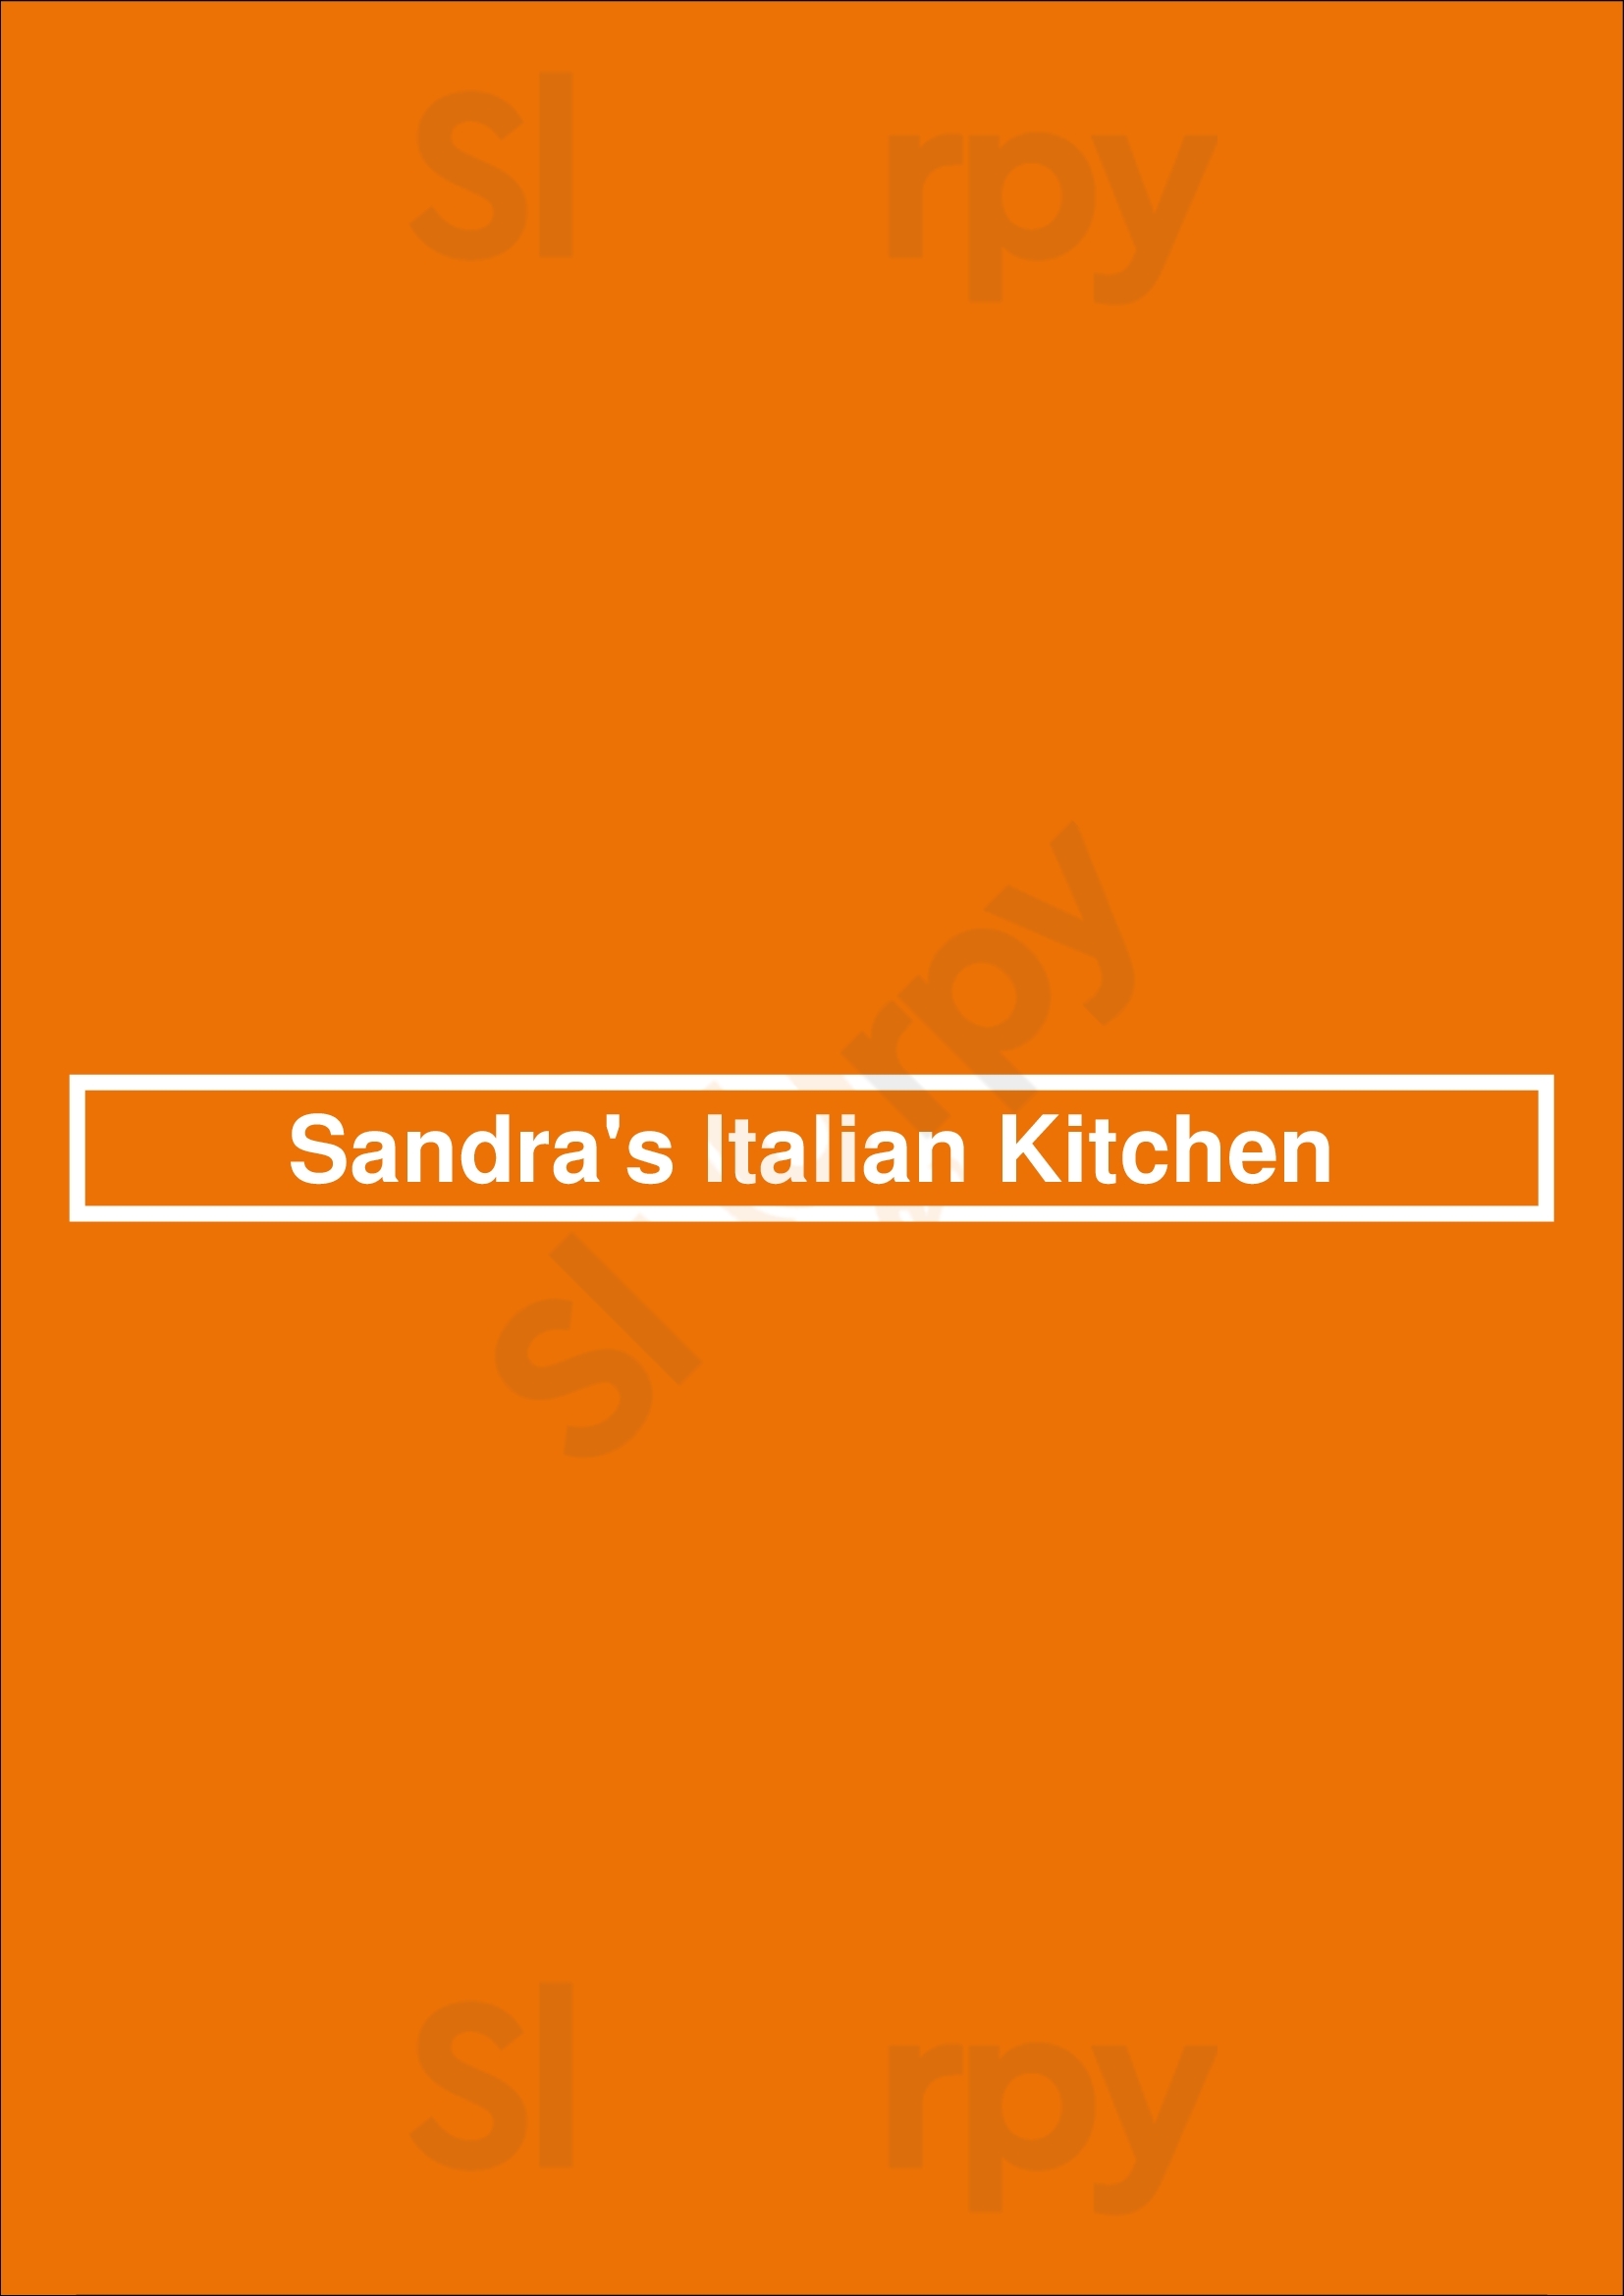 Sandra's Italian Kitchen Toronto Menu - 1